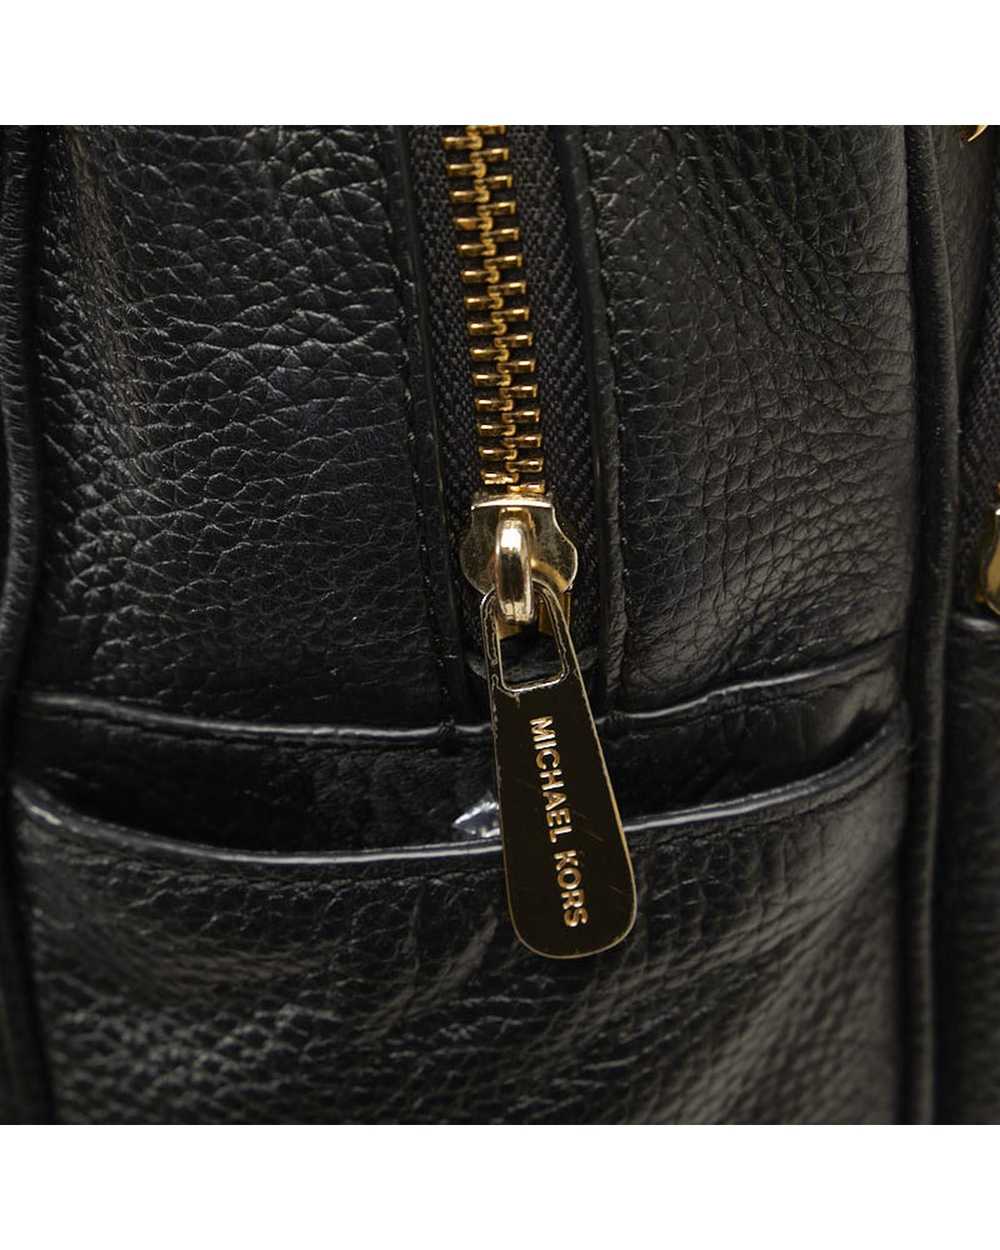 Michael Kors Studded Leather Abbey Backpack Bag - image 5